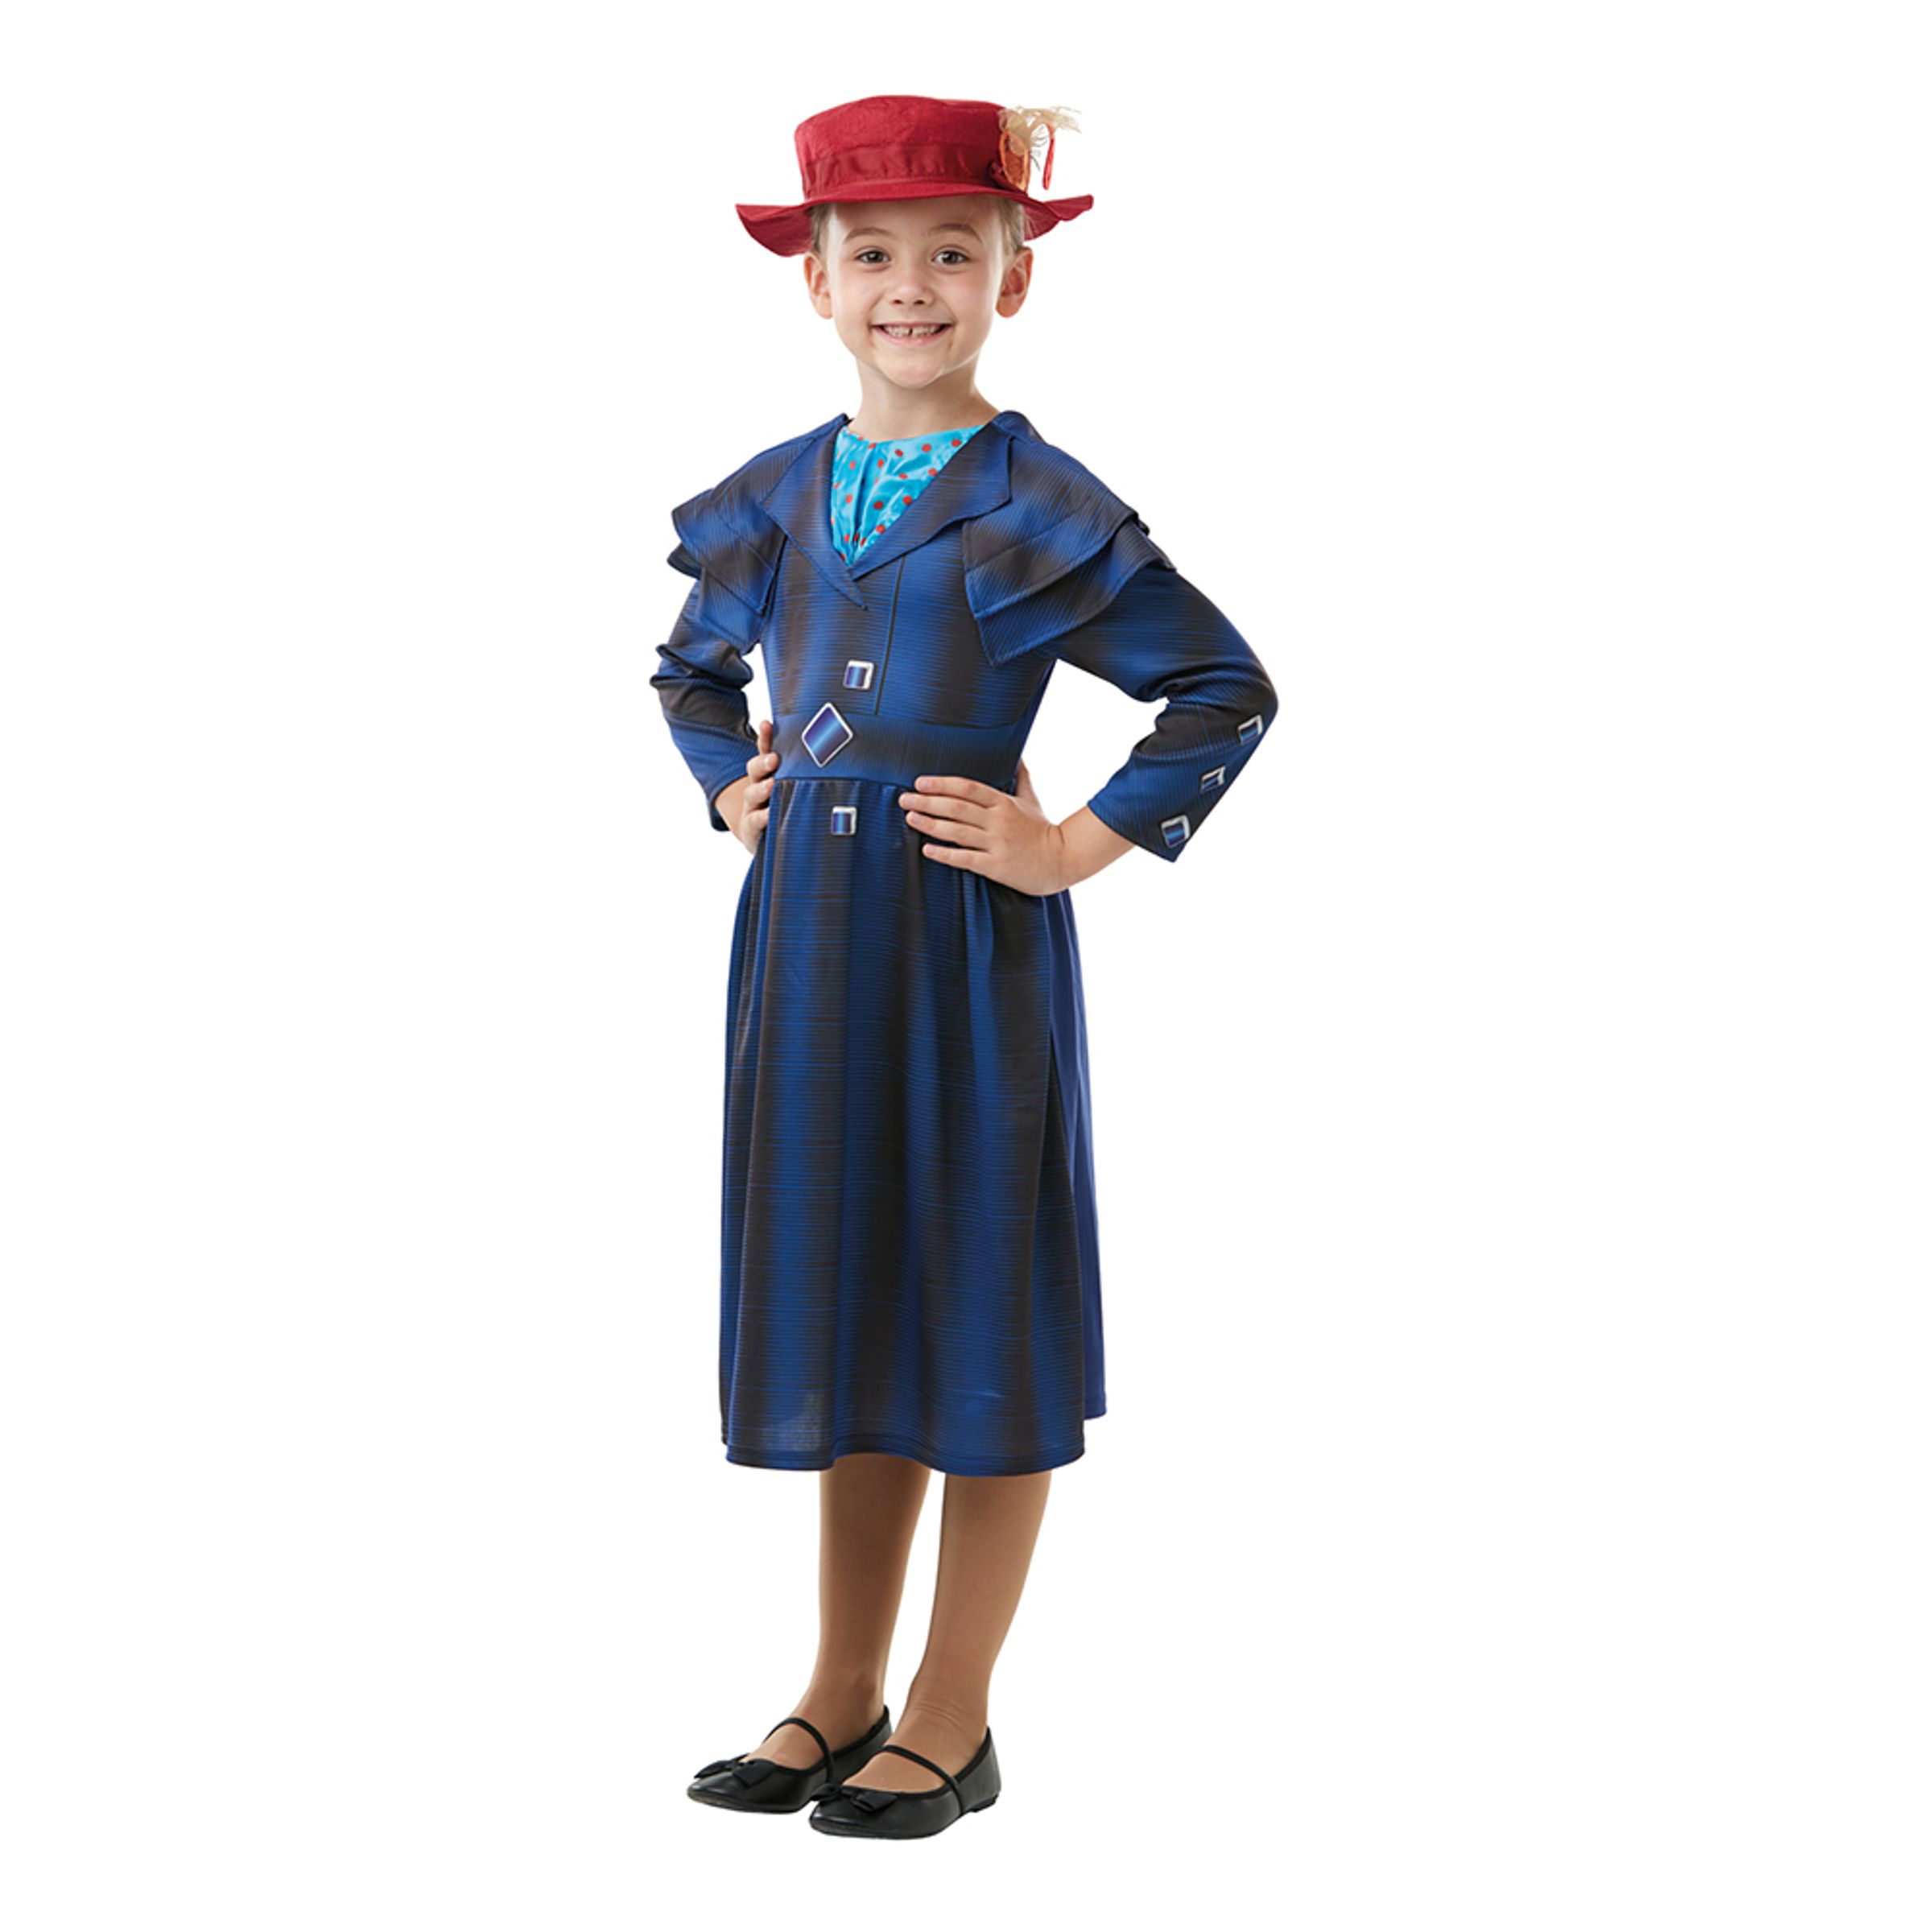 Mary Poppins Returns Barn Maskeraddräkt - X-Large